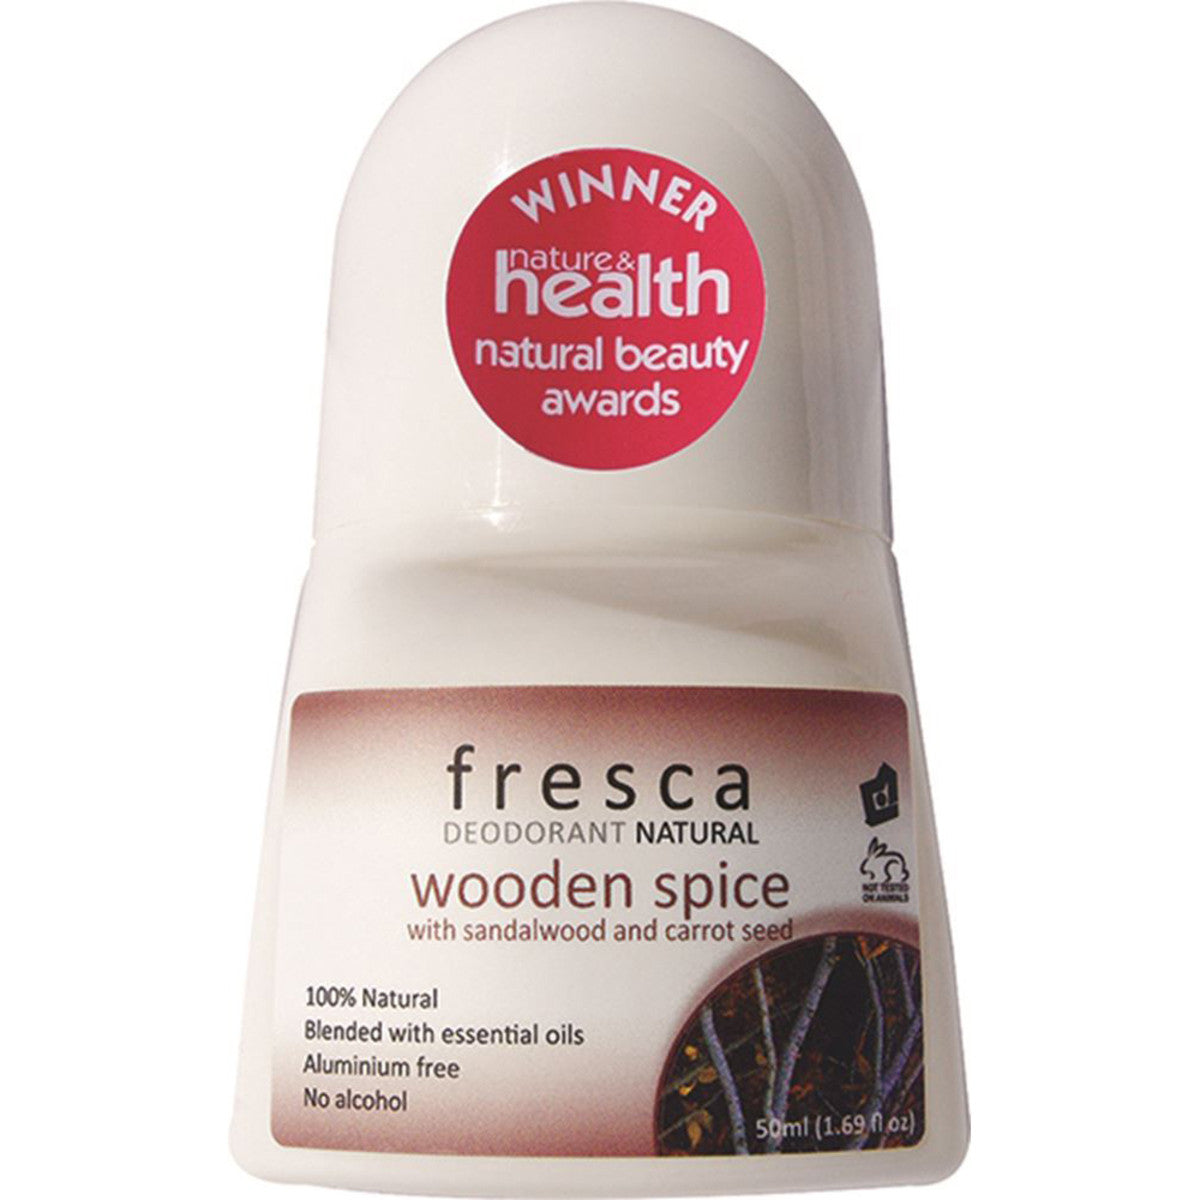 Fresca Natural - Deodorant Wooden Spice